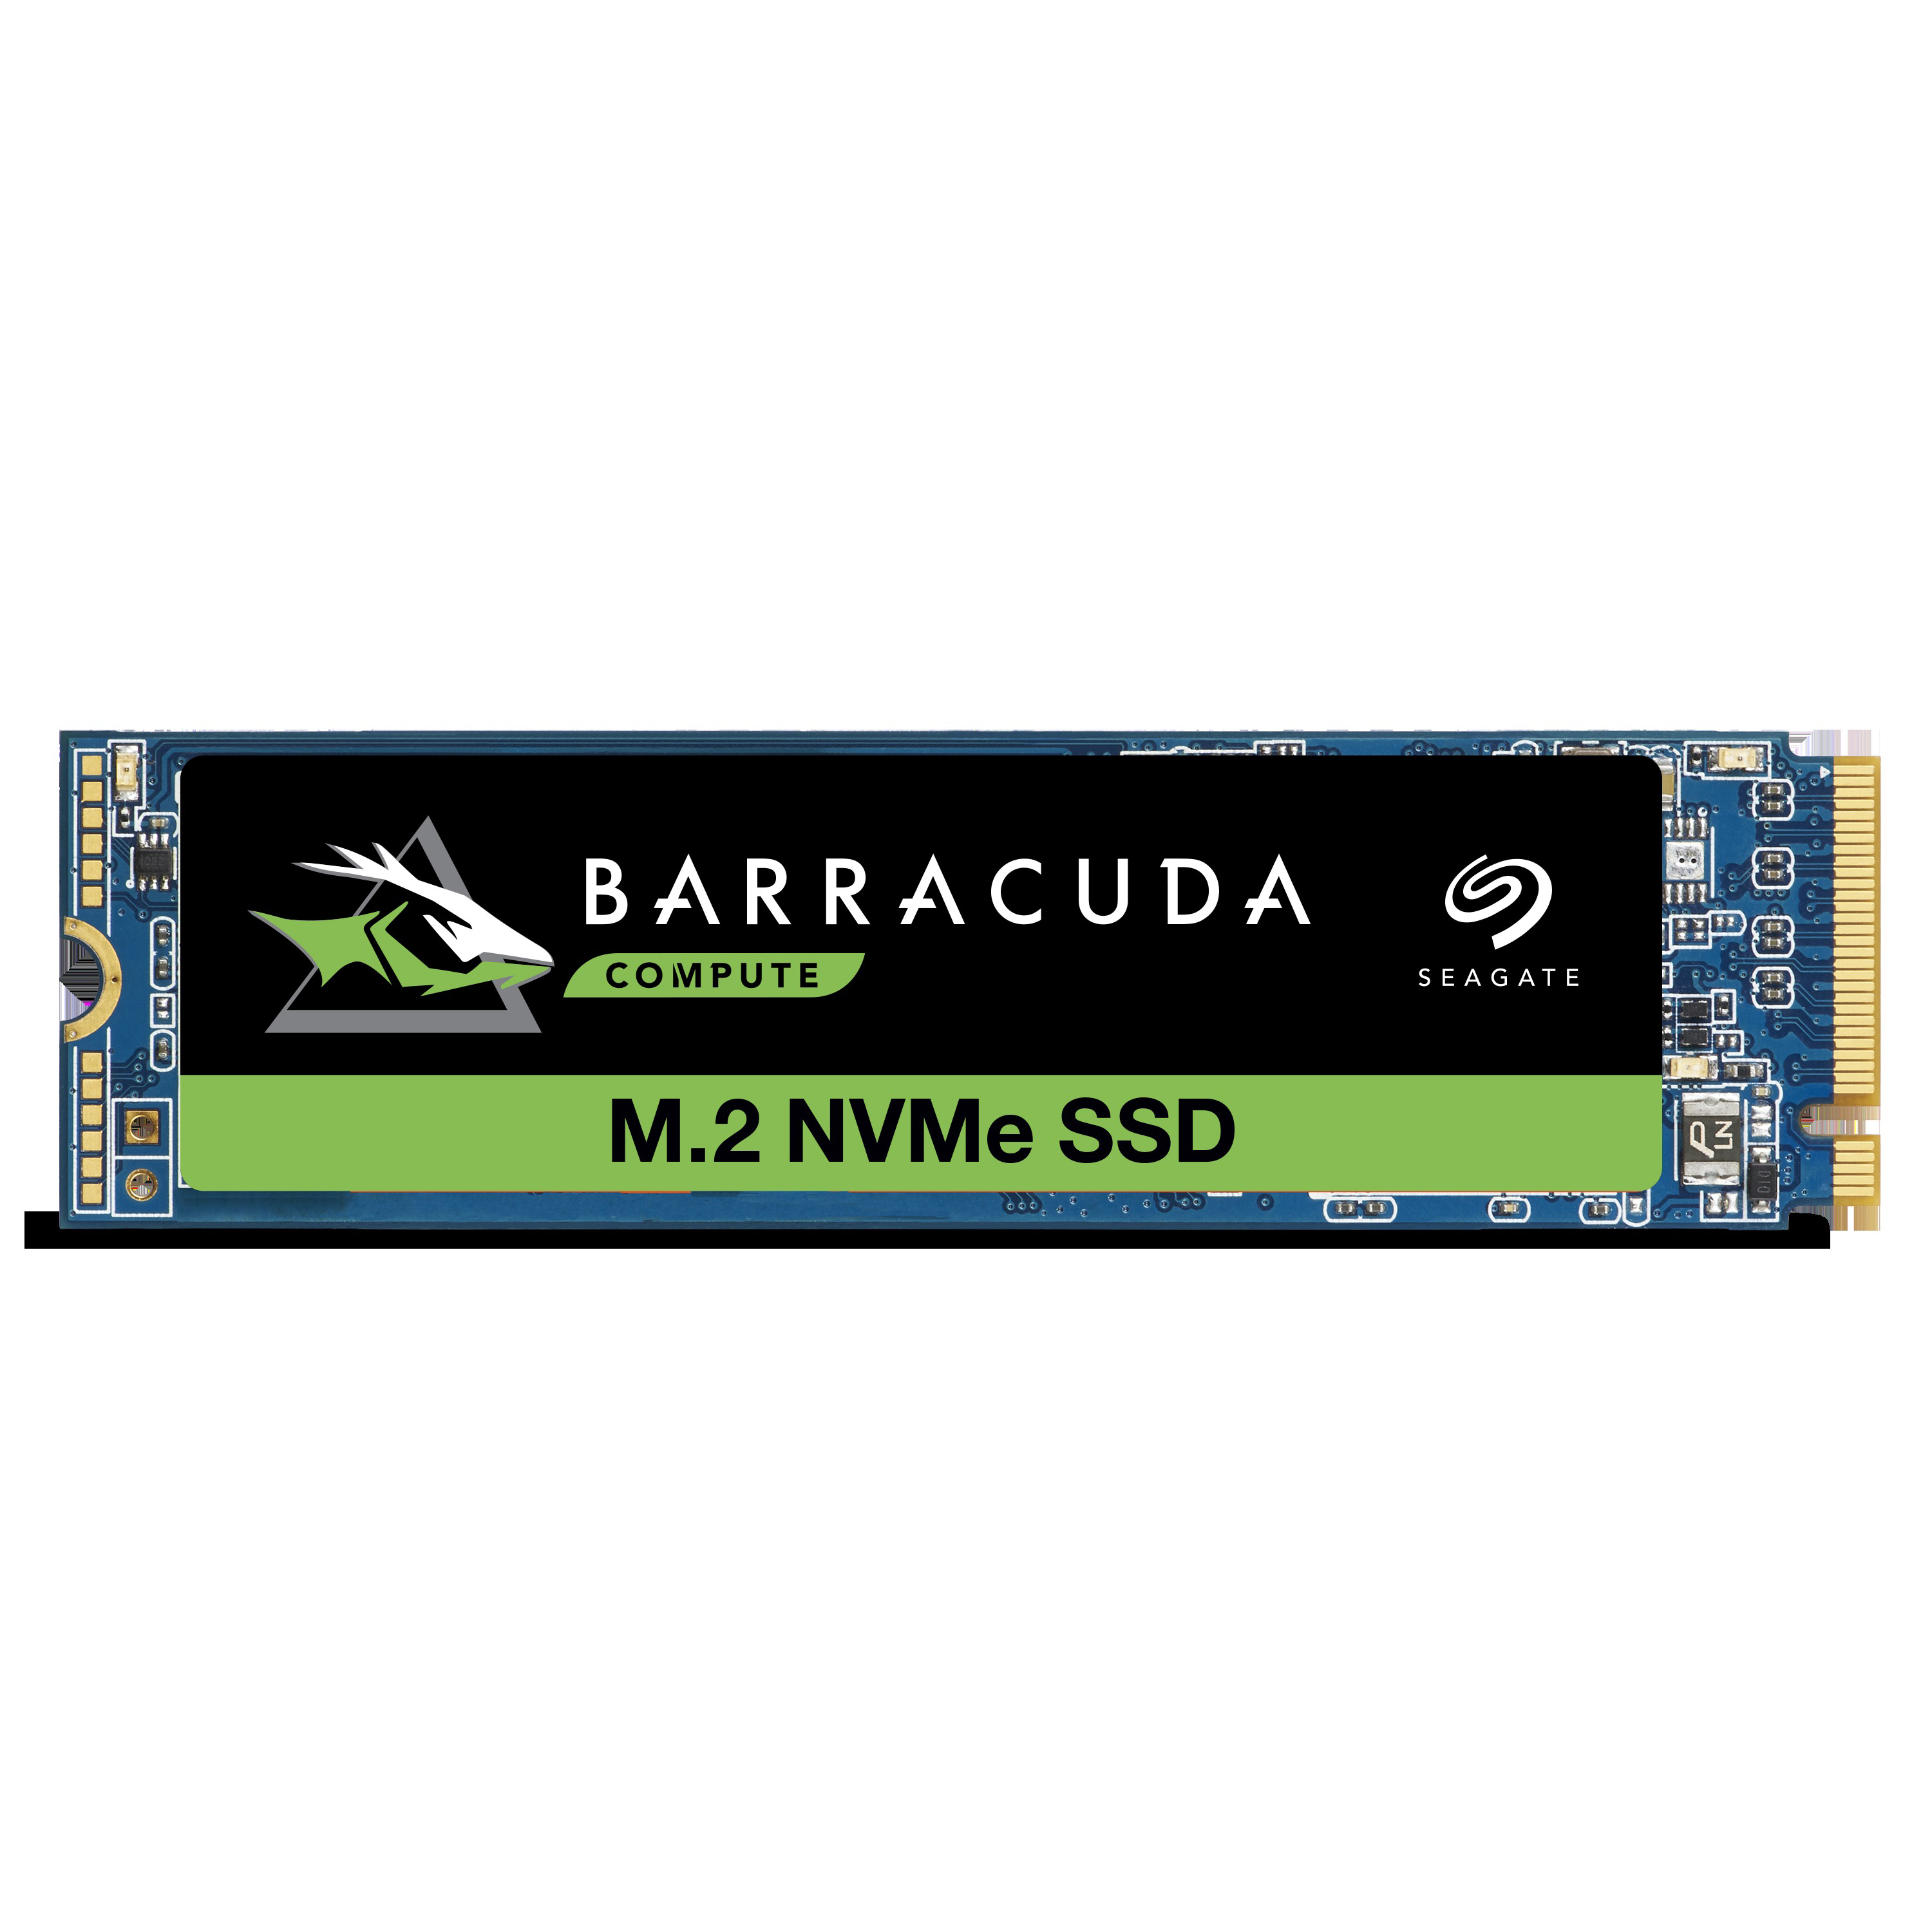 SEAGATE ZP256CM30041 GB 256 510 PCIe, via BARRACUDA SSD M.2 intern Festplatte Retail